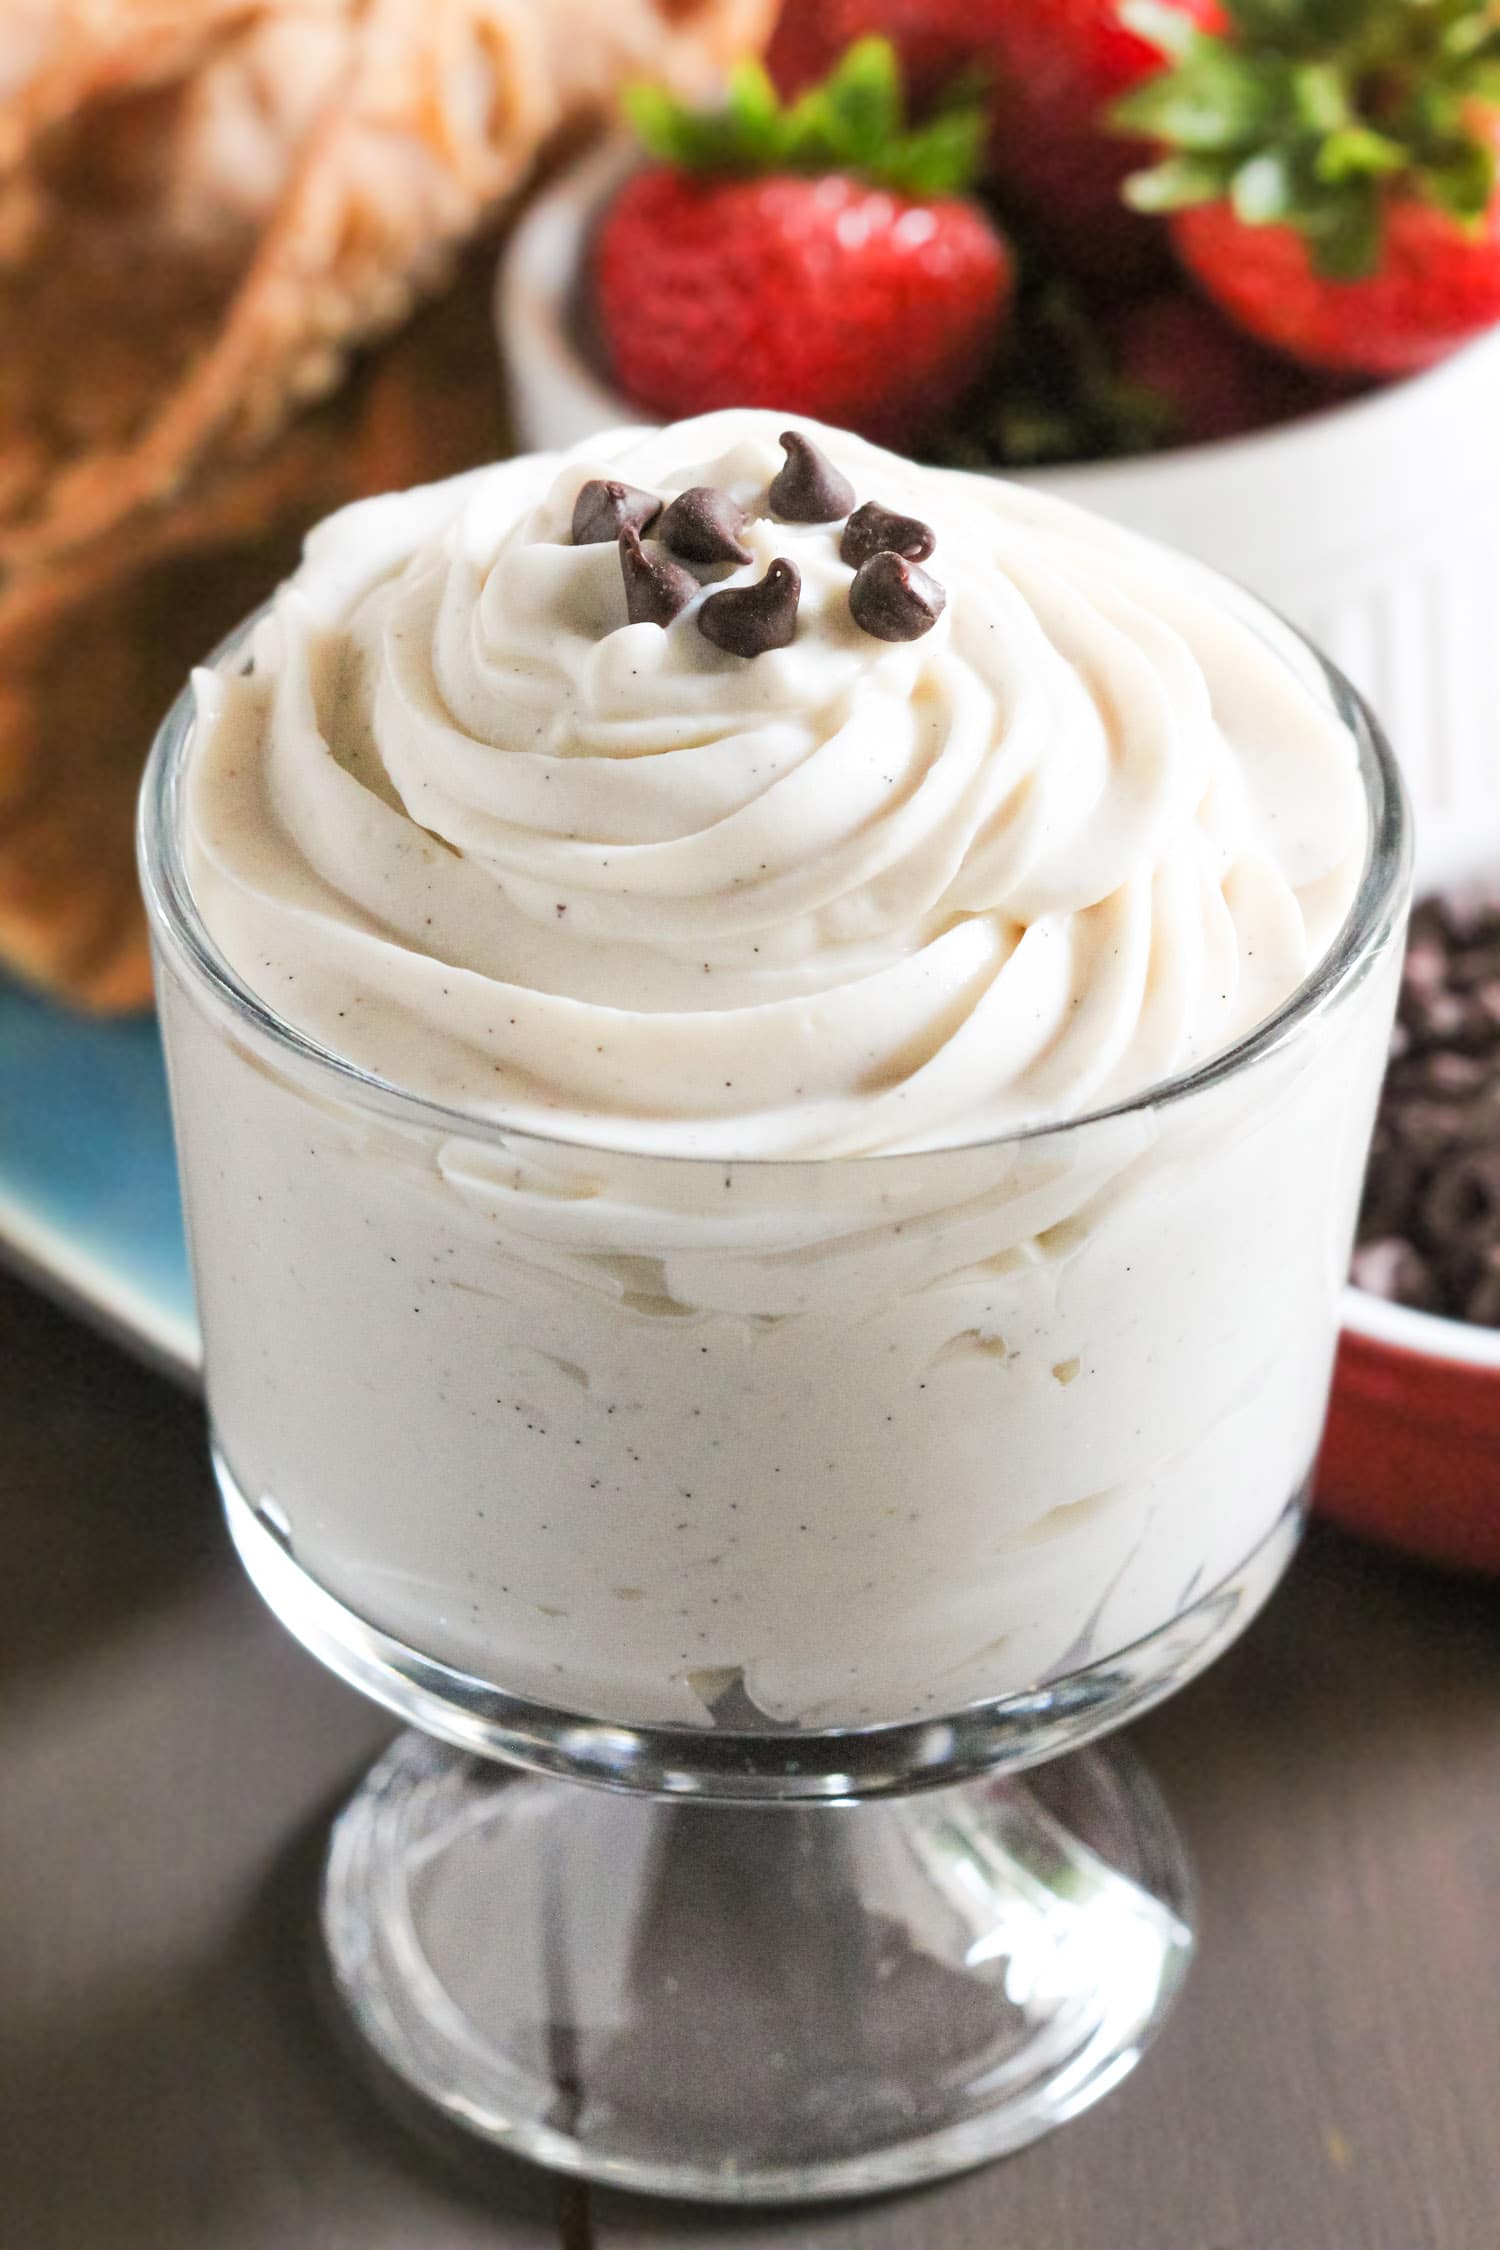 30 healthy 30 minute dessert recipes -- 1/30: Cannoli Dip